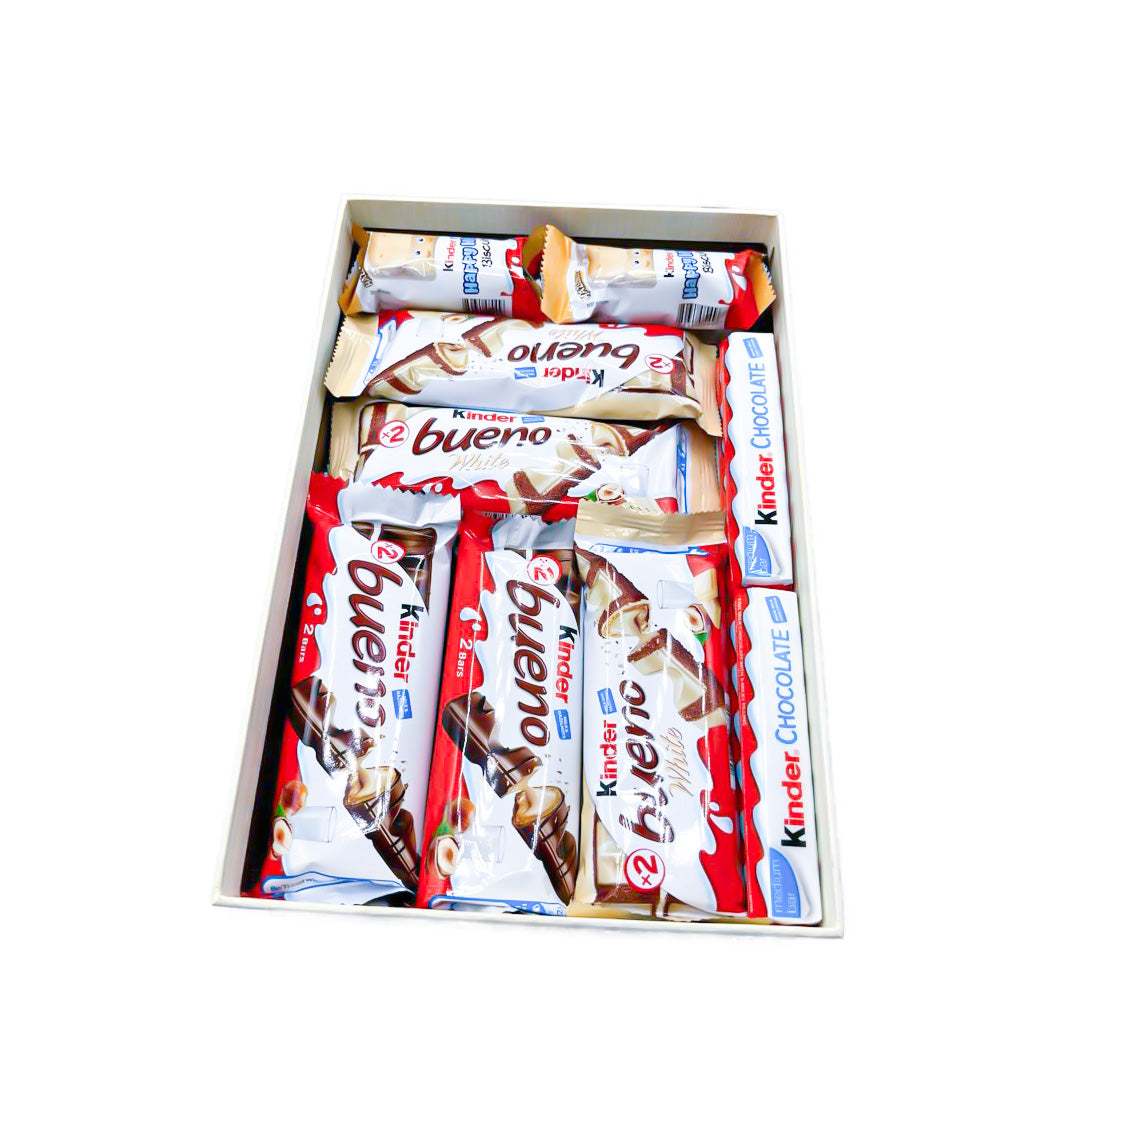 Celebrate with Sweetness Chocolate Gift Box and Kinder Bueno Hamper - 24 Chocolates